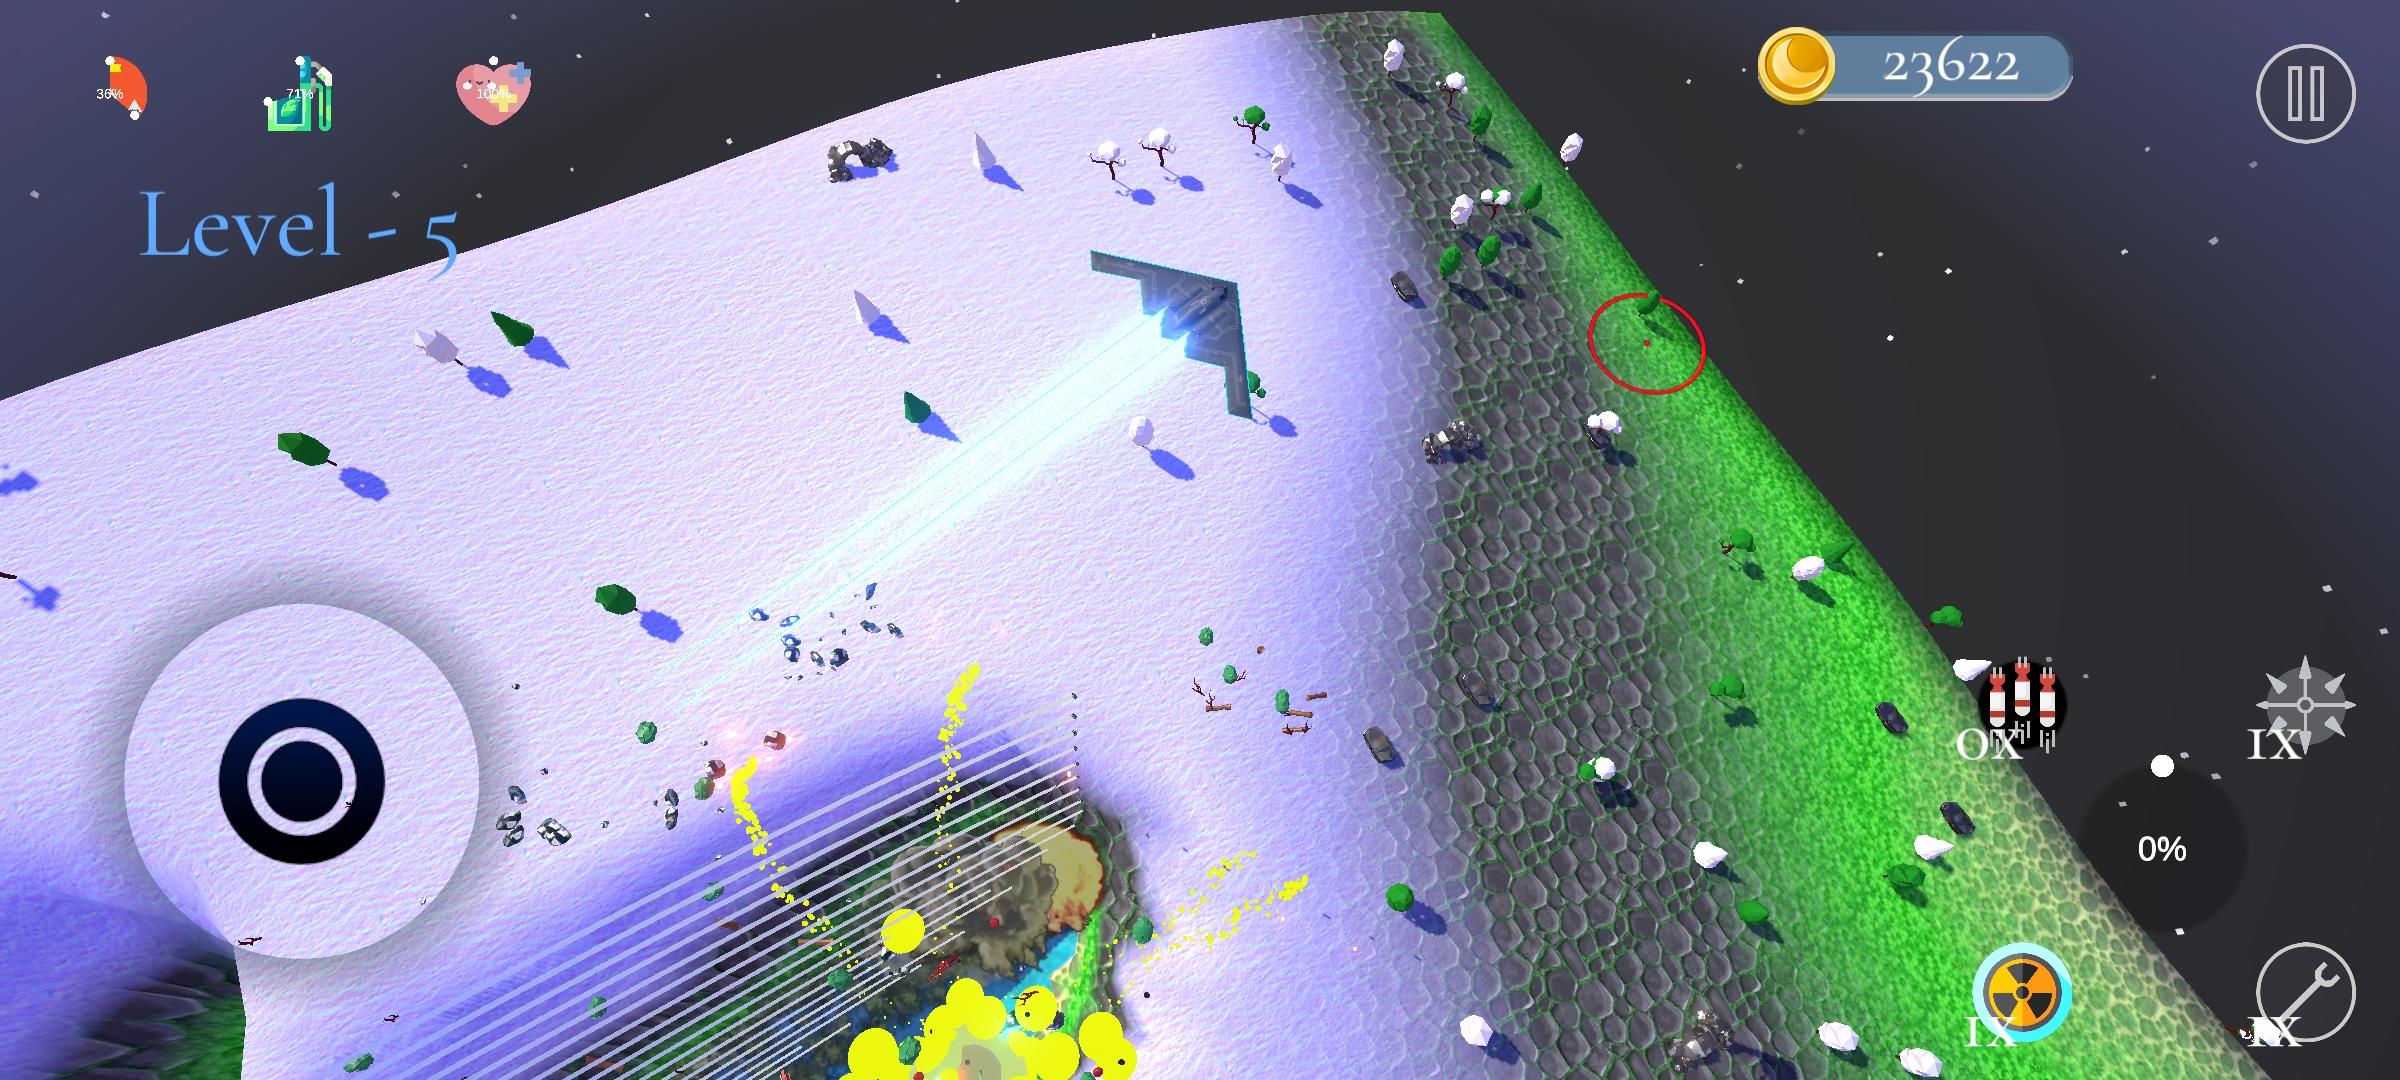 Infinite Bomber 3D 1.8 Screenshot 12